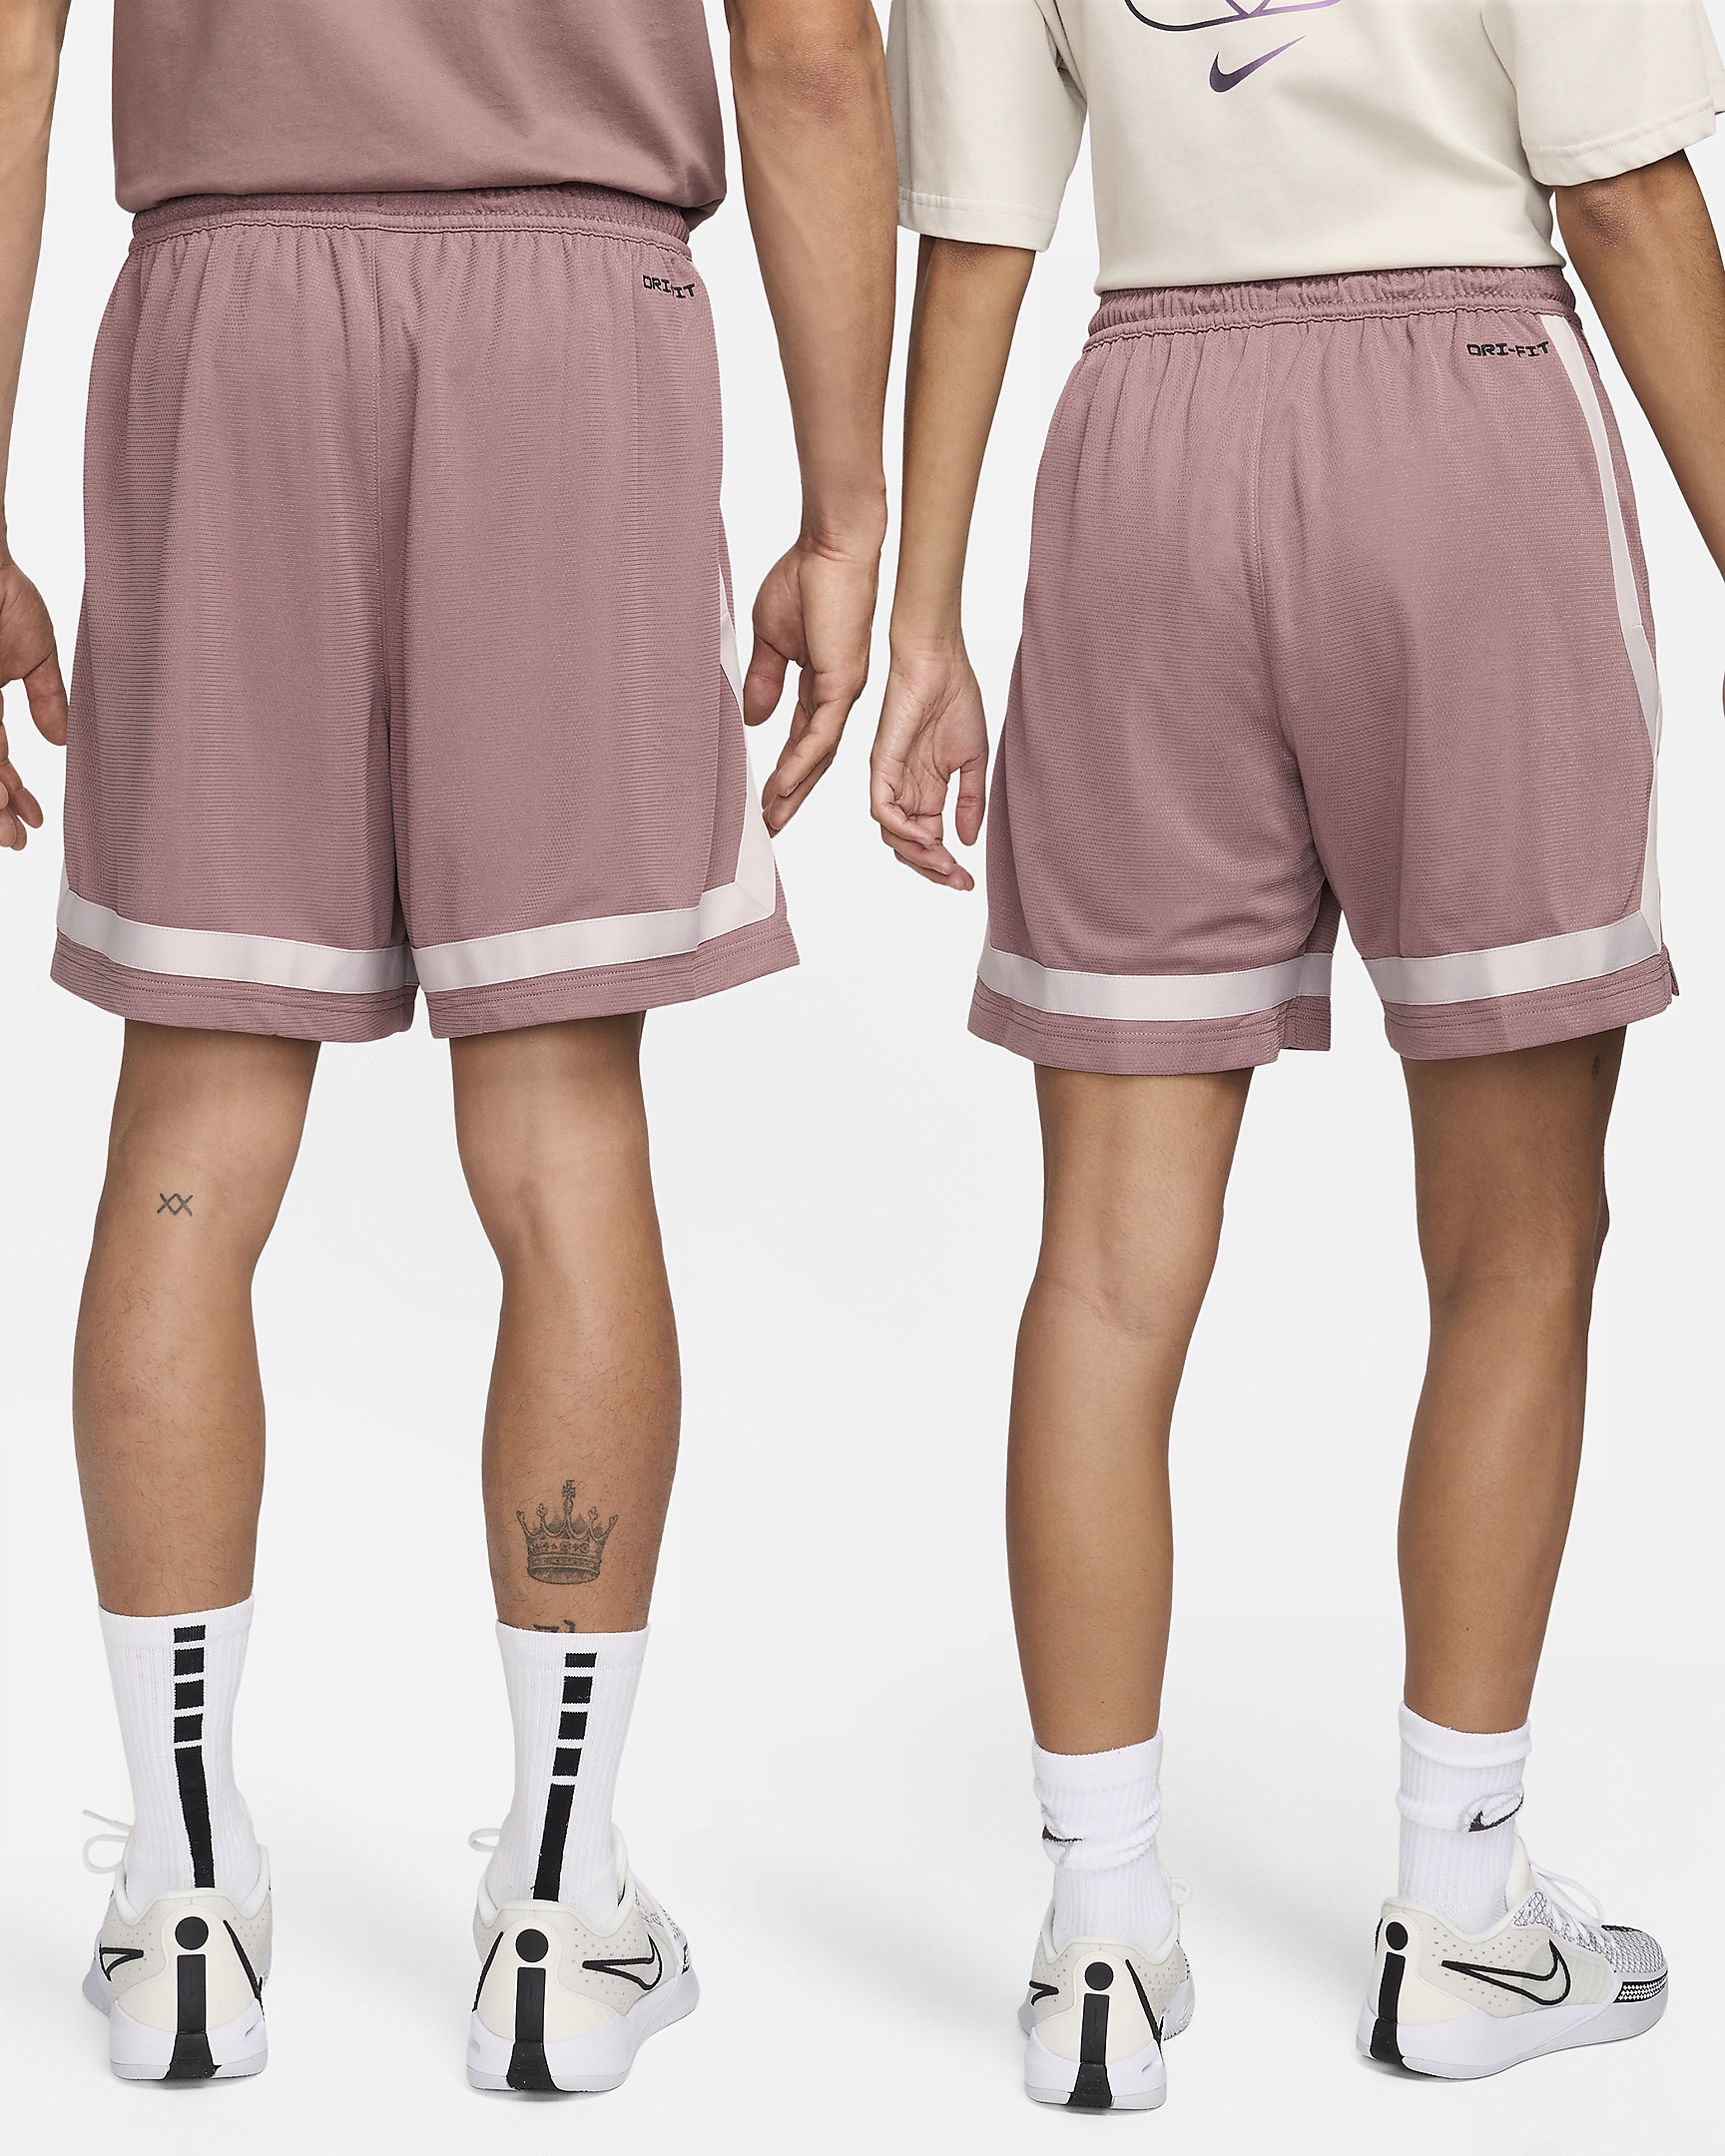 Nike Women's Sabrina Dri-FIT Basketball Shorts - 2